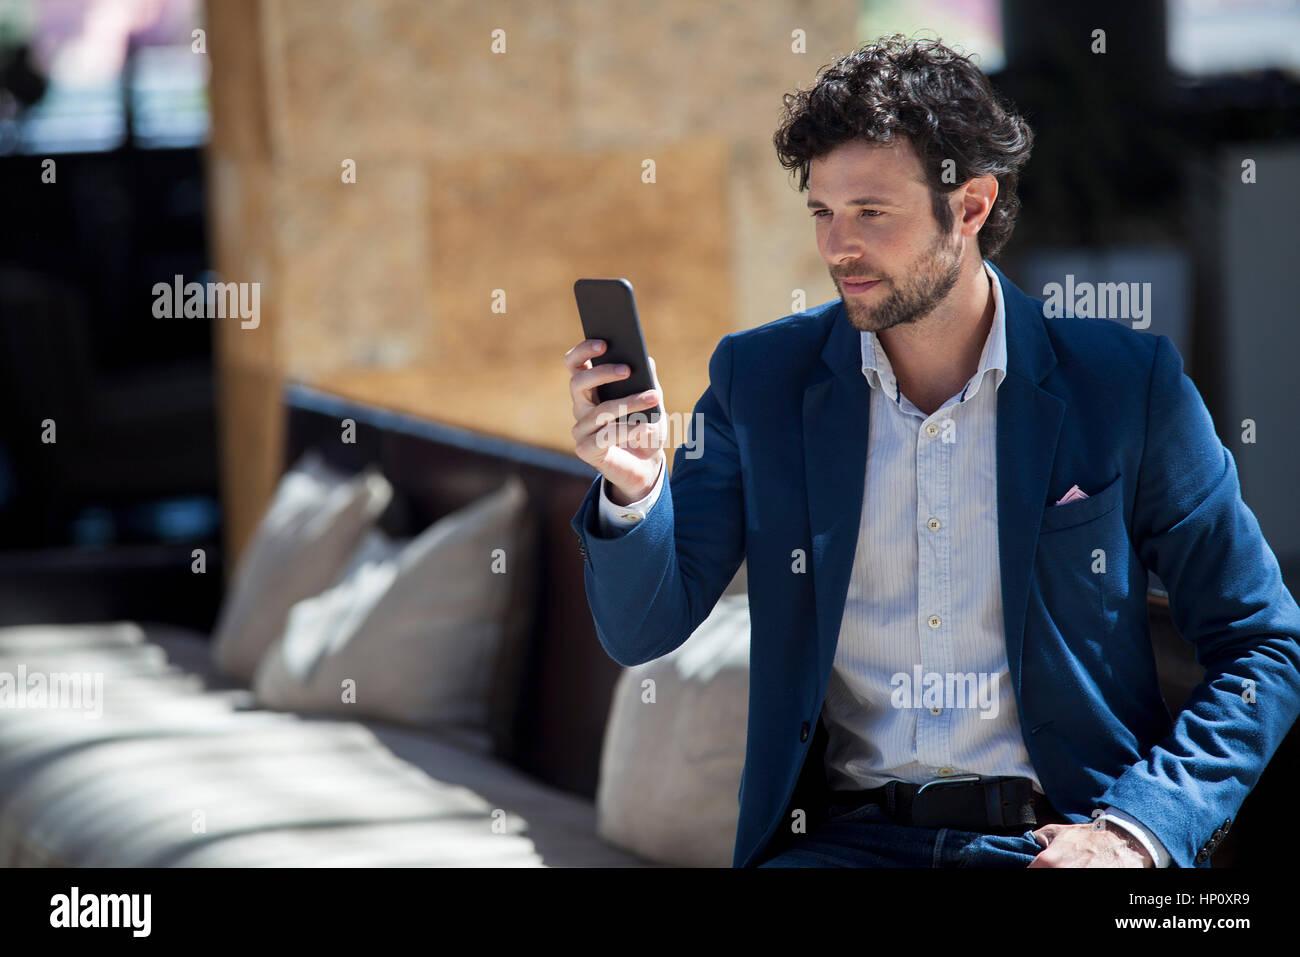 Man using multimedia smartphone Stock Photo